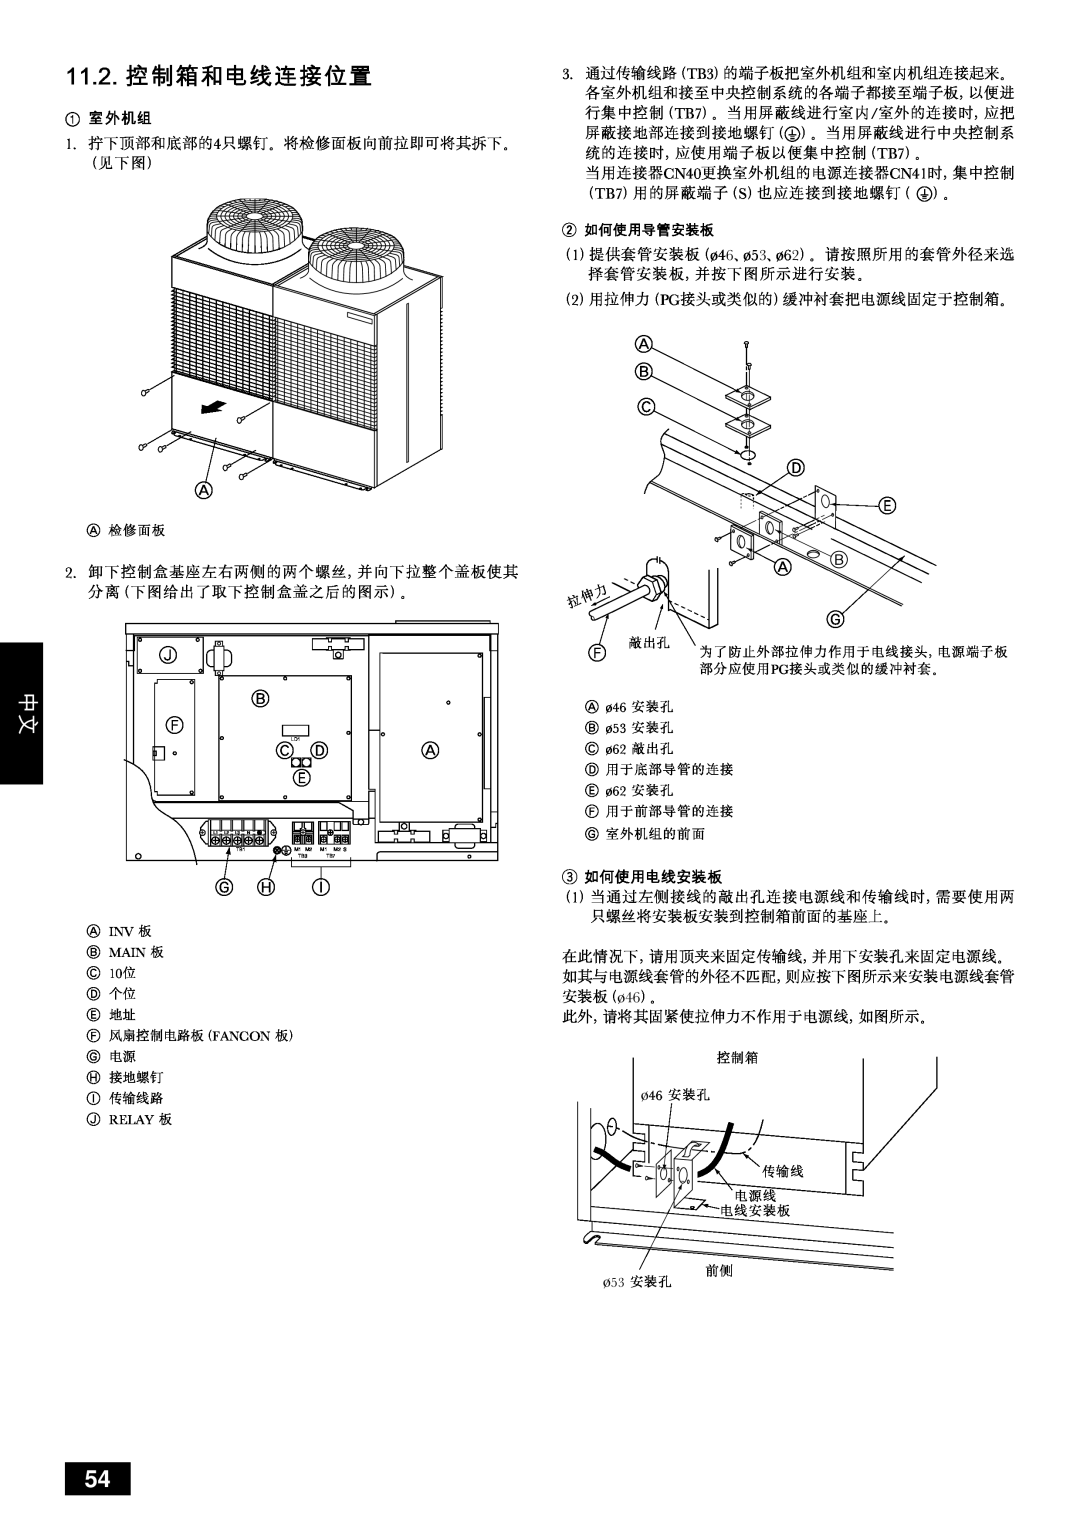 Mitsubishi Electronics PUHY-YMC installation manual Nnkok=, J B F, C D A E, A B C D E A B G, F !#$%&*+,-. */012 